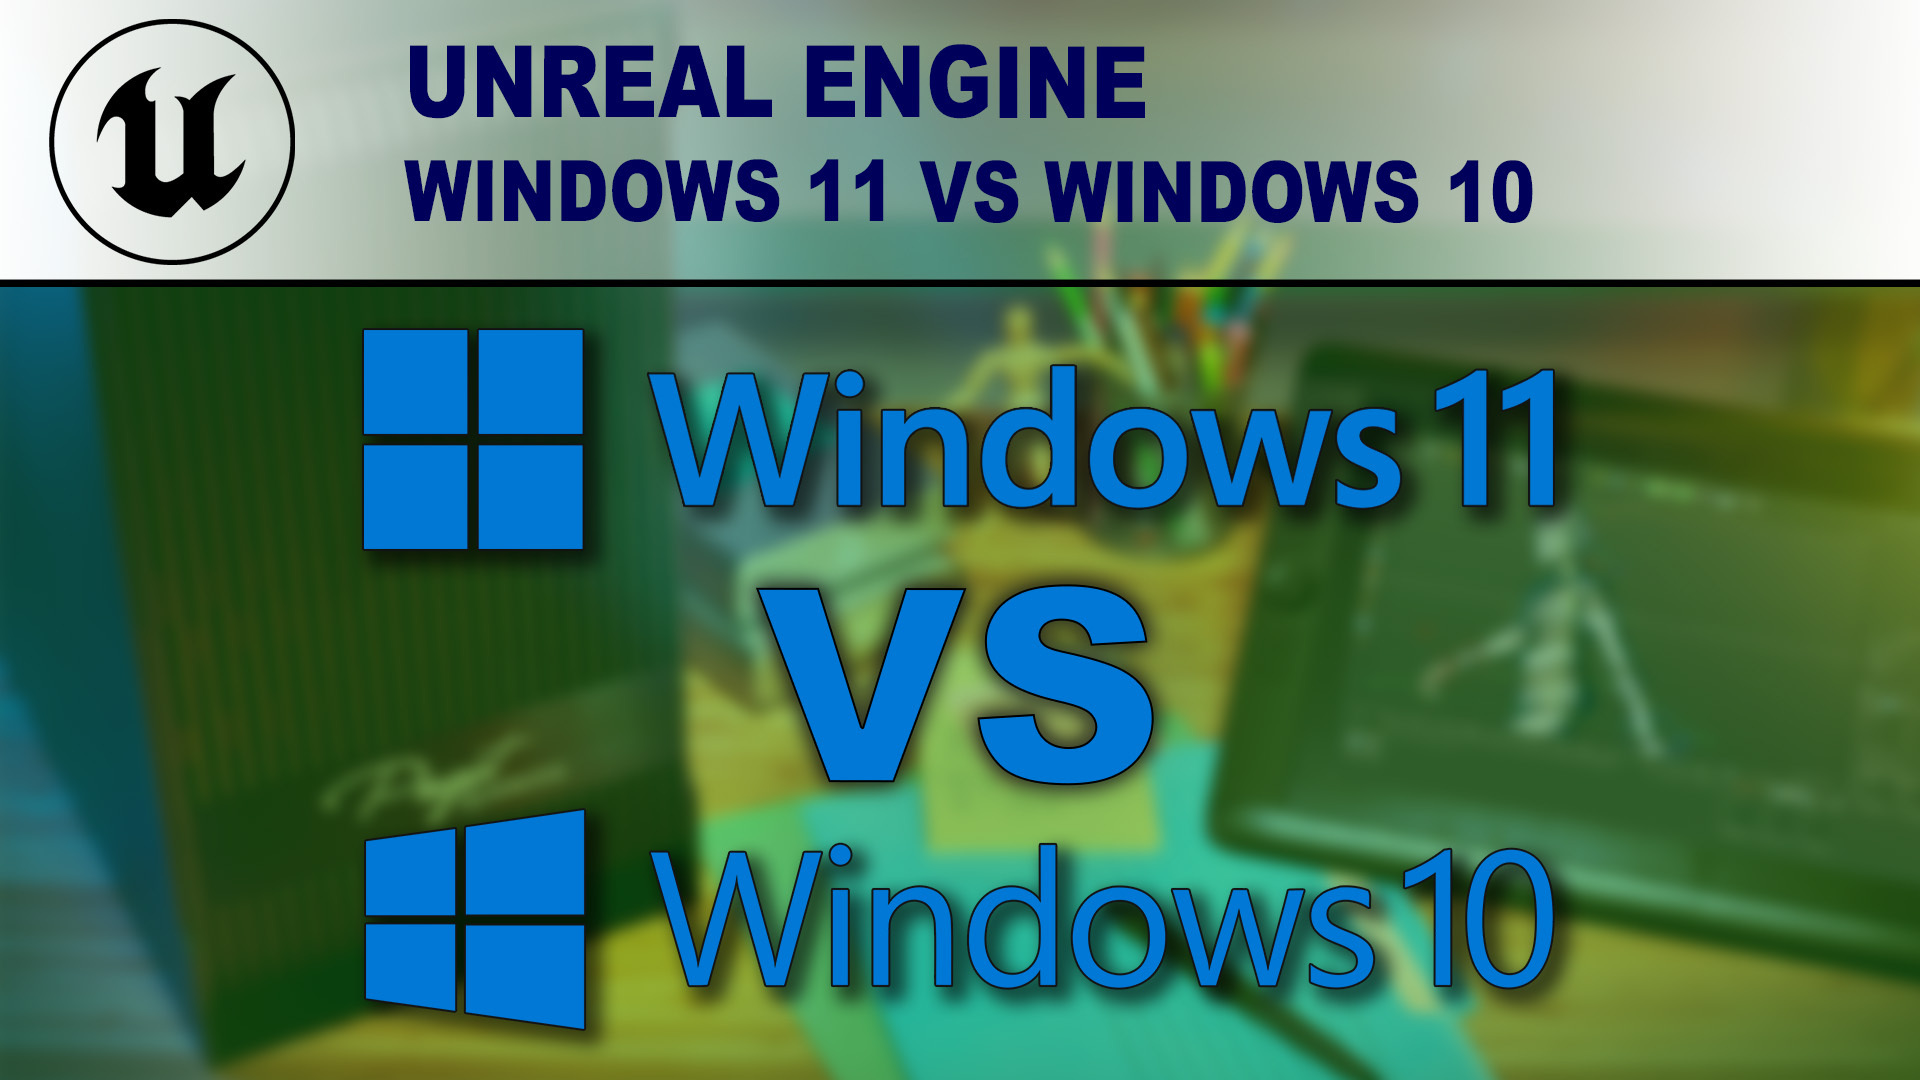 Windows 10 vs Windows 11 for Unreal Engine